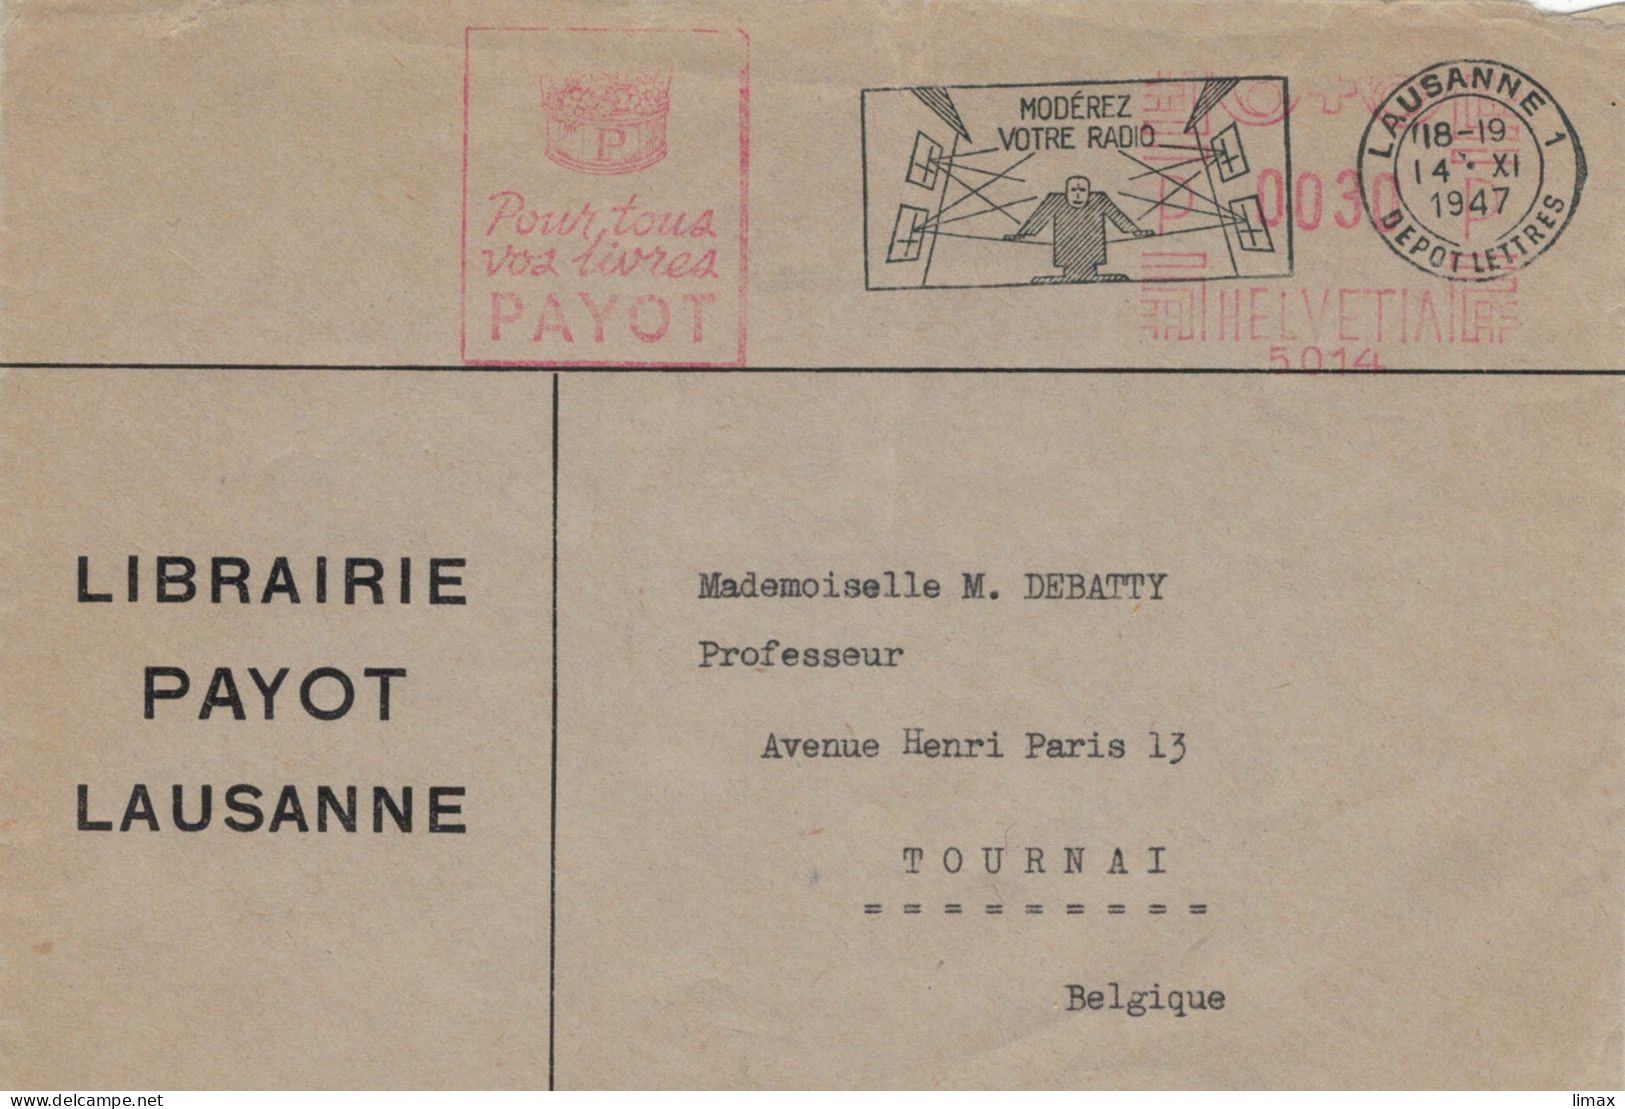 Librairie Payot Lausanne 1947 Stempel Nr. 5014 Moderez Votre Radio - Lautstärke > Prof. M. Debatty Tournai - Frankiermaschinen (FraMA)